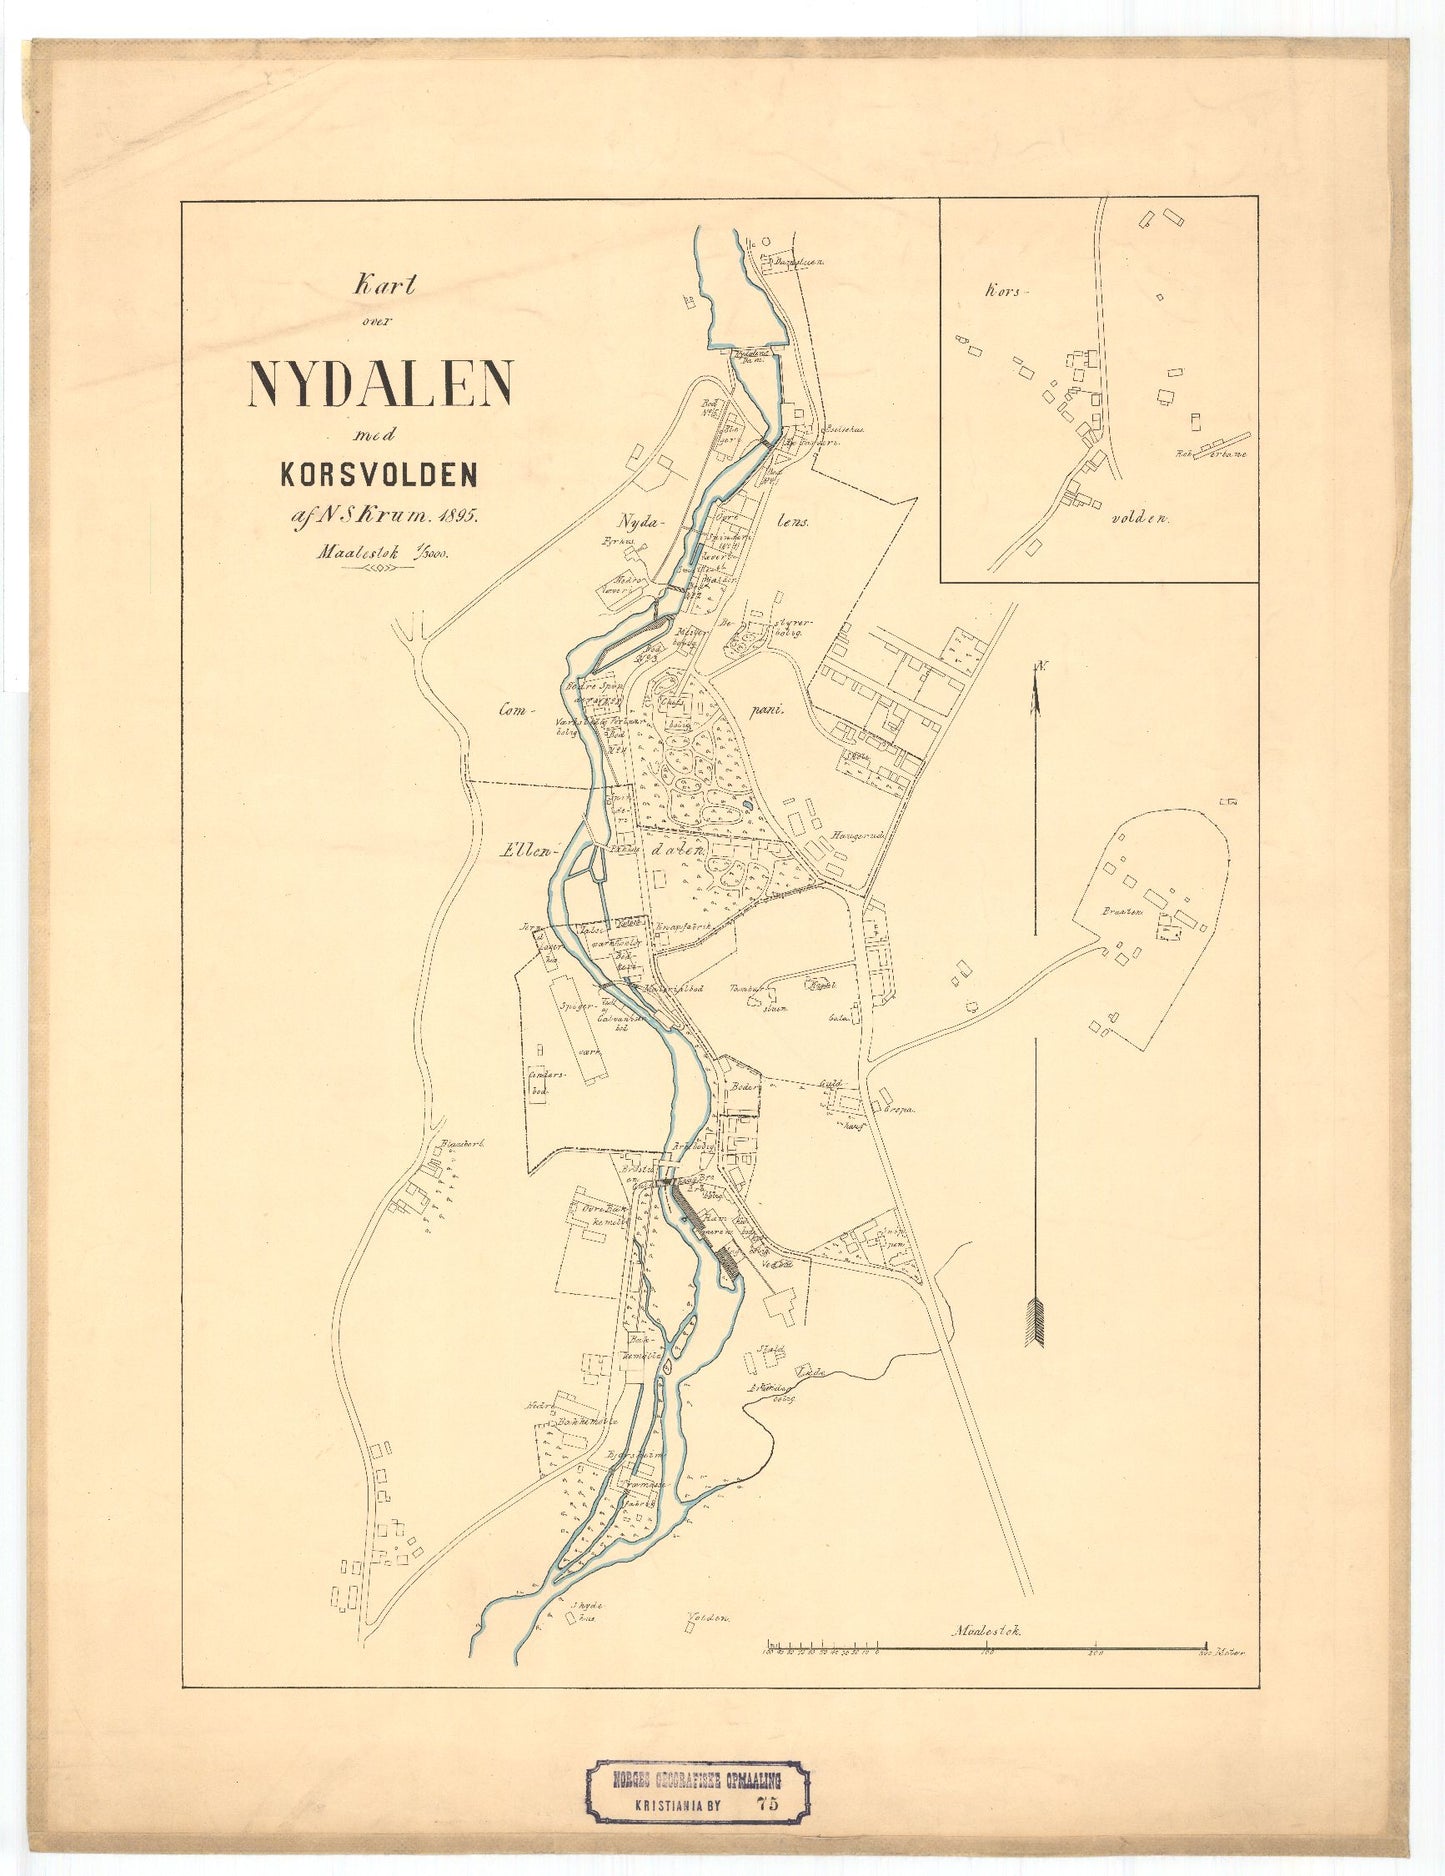 Kristiania amt nr 75: Kart over Nydalen med Korsvolden: Oslo